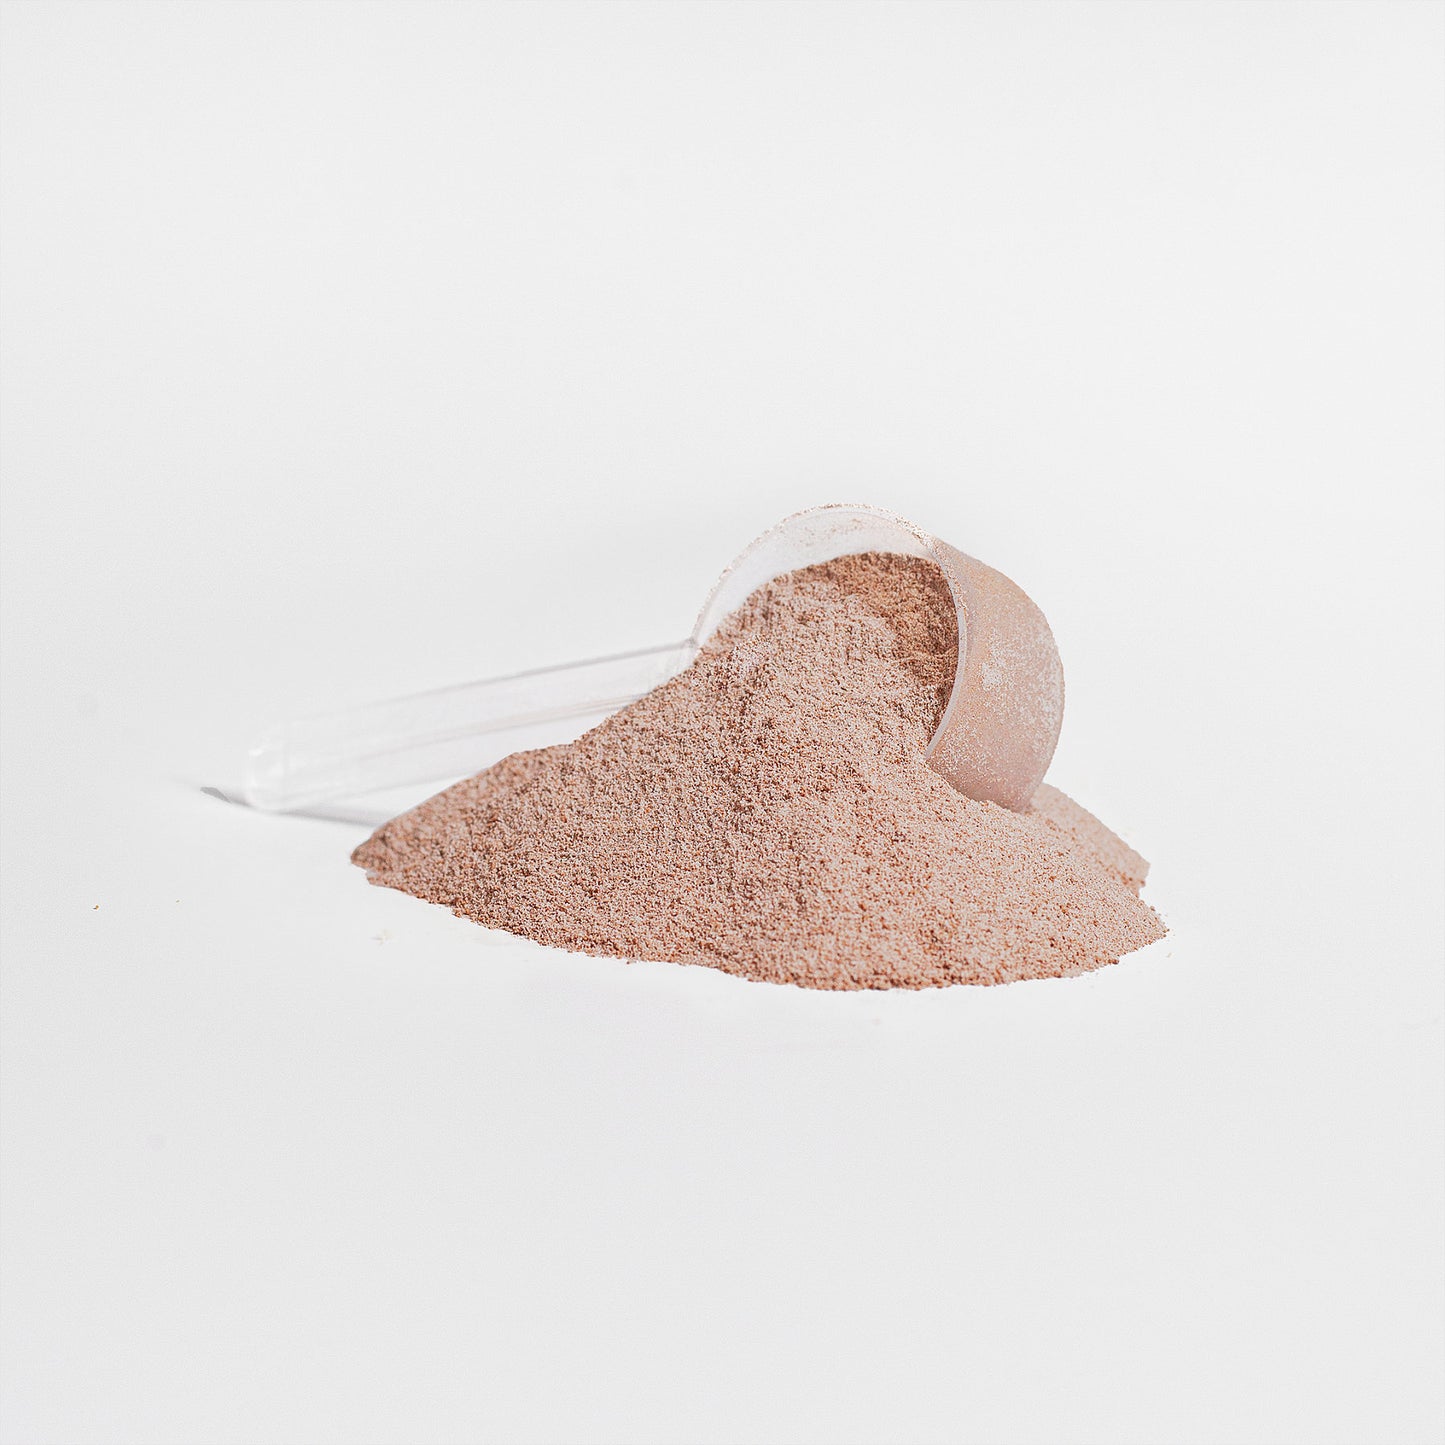 Hydrolyzed Collagen Peptides Powder (Chocolate)